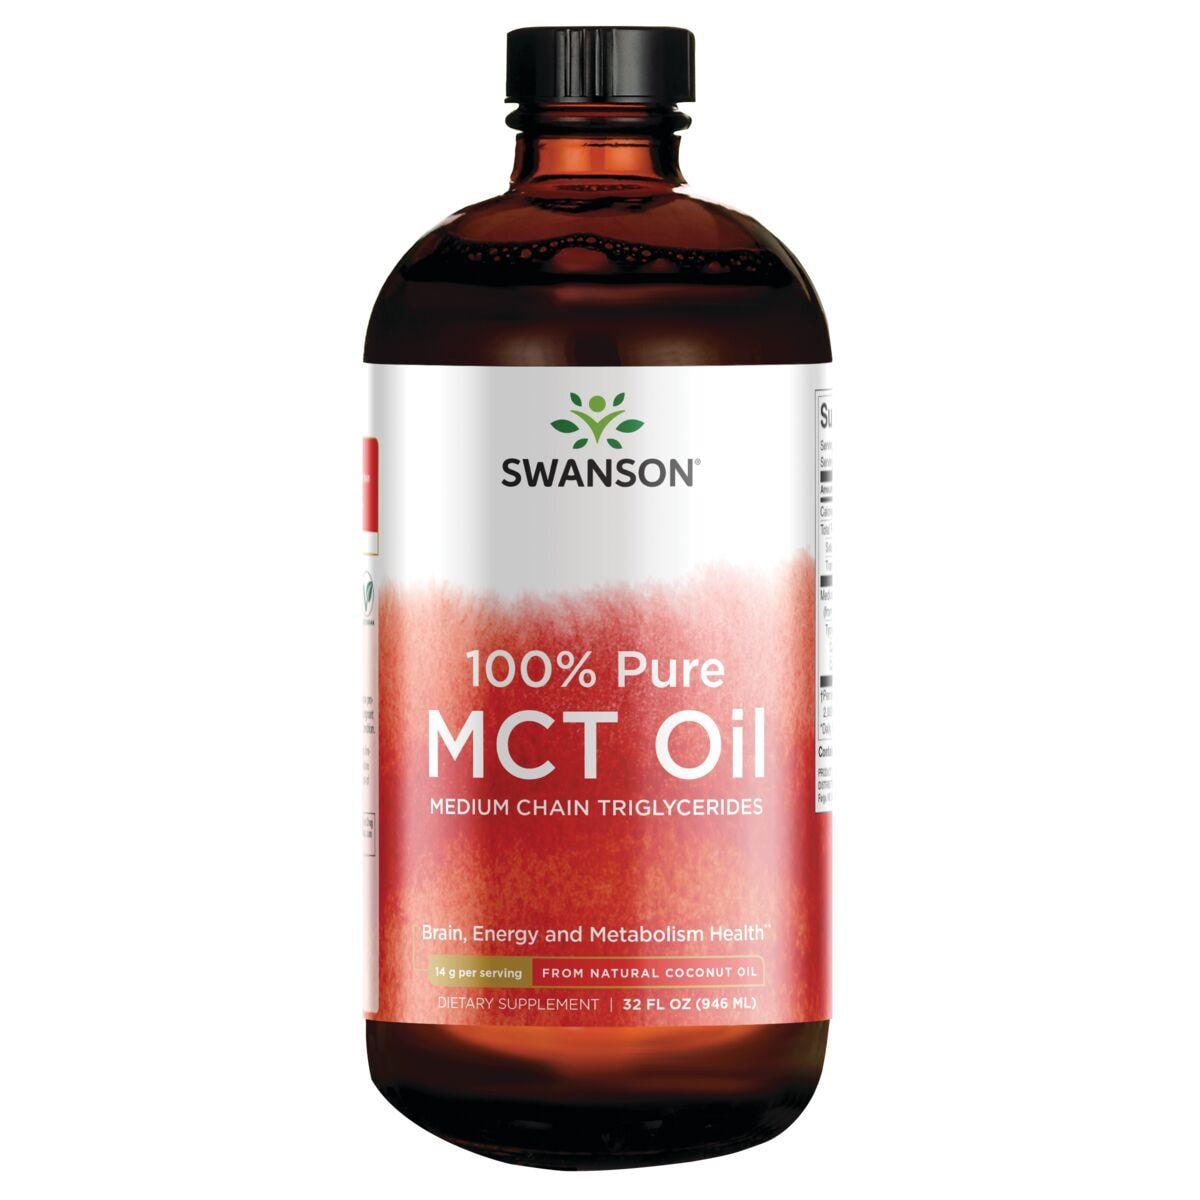 Swanson Premium 100% Pure Mct Oil Medium Chain Triglycerides Supplement Vitamin 14 G 32 fl oz Liquid